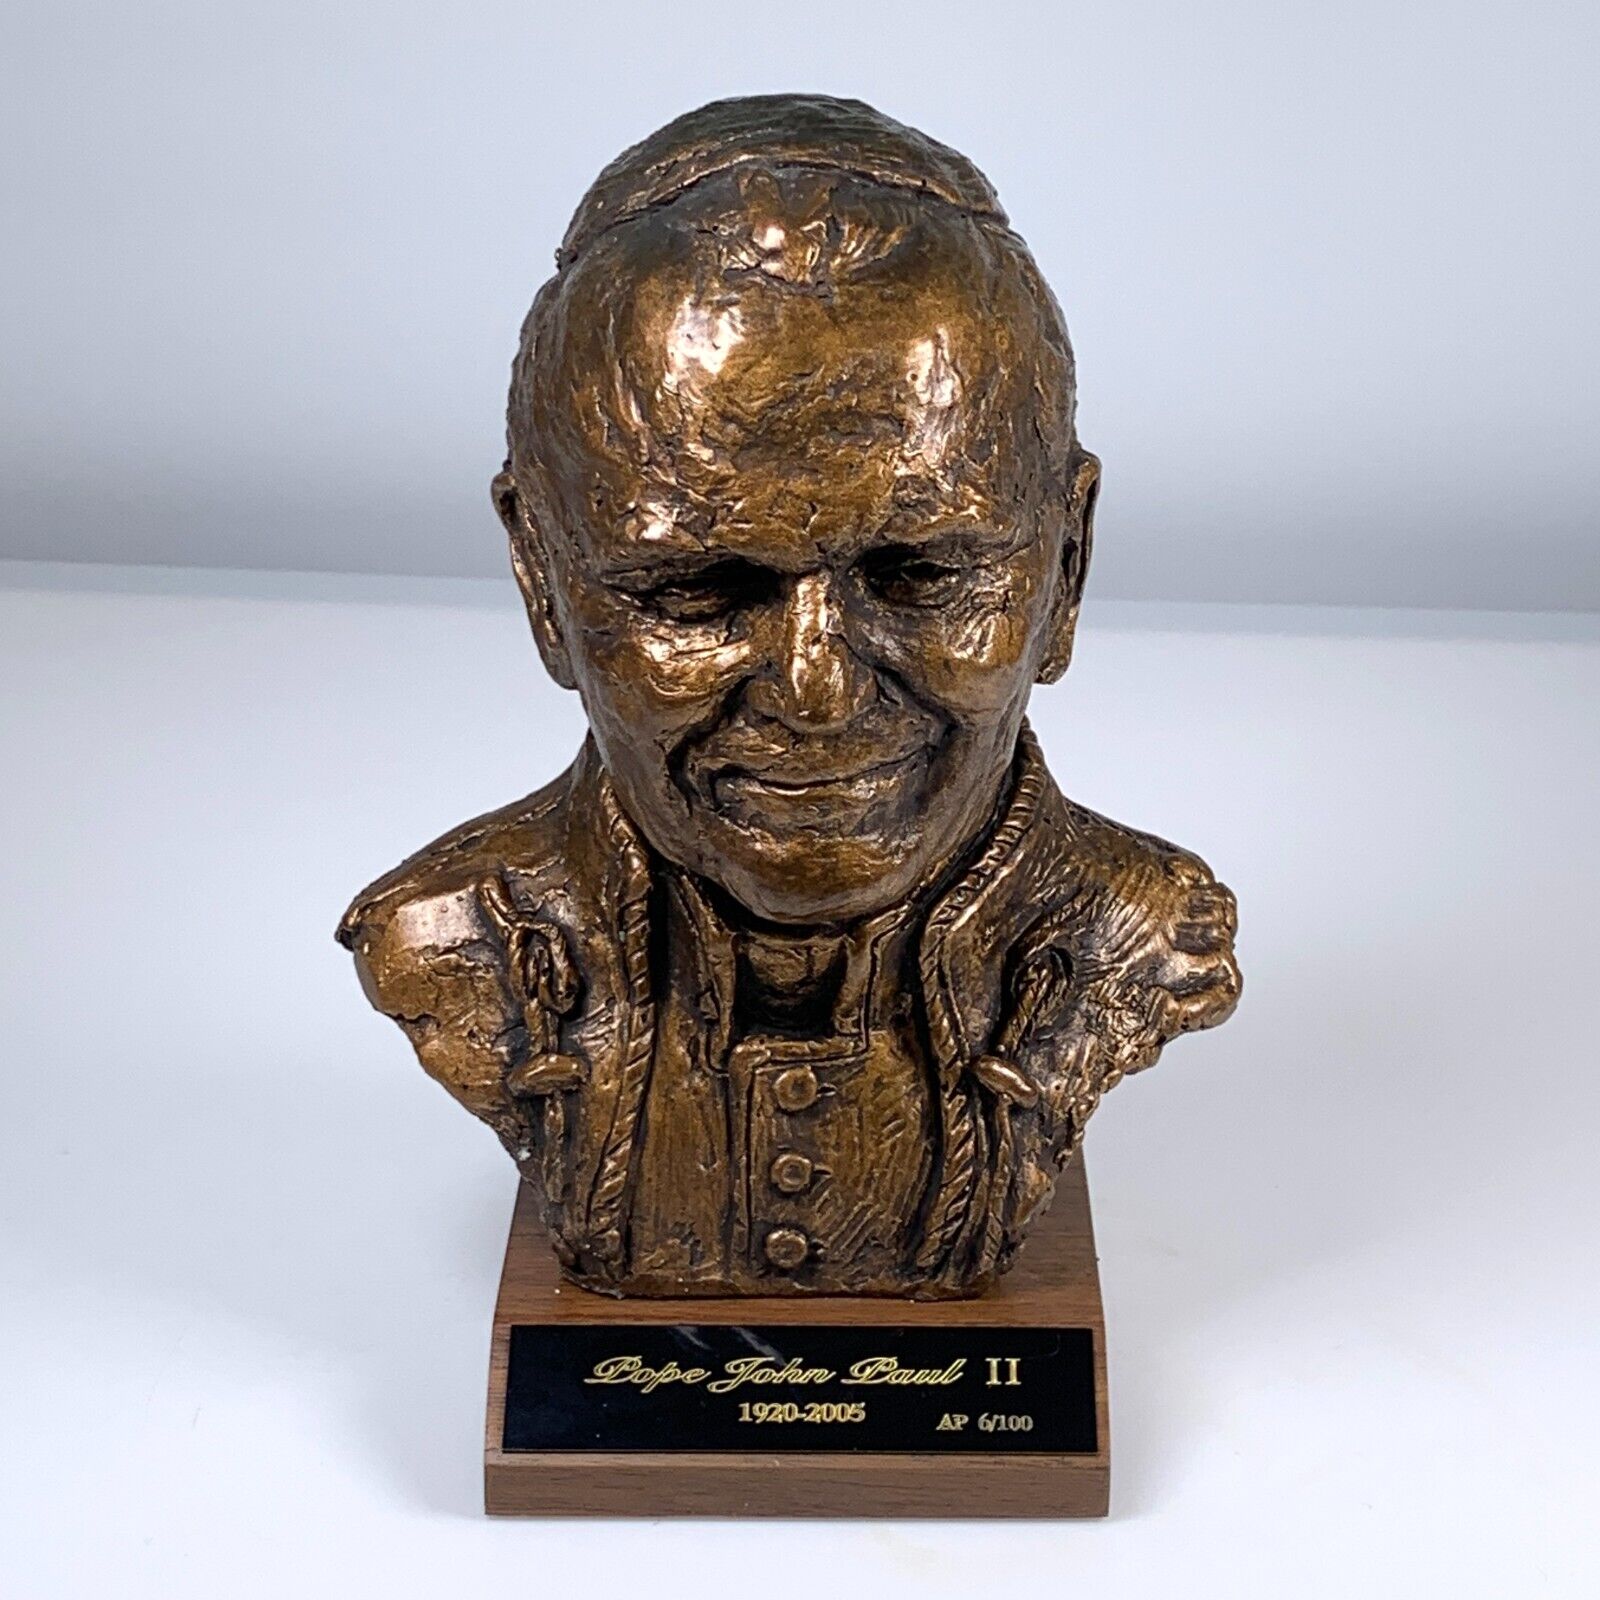 2005 Pope John Paul II Bronze Bust Statue 1920-2005 ARTIST PROOF 6/100 RARE